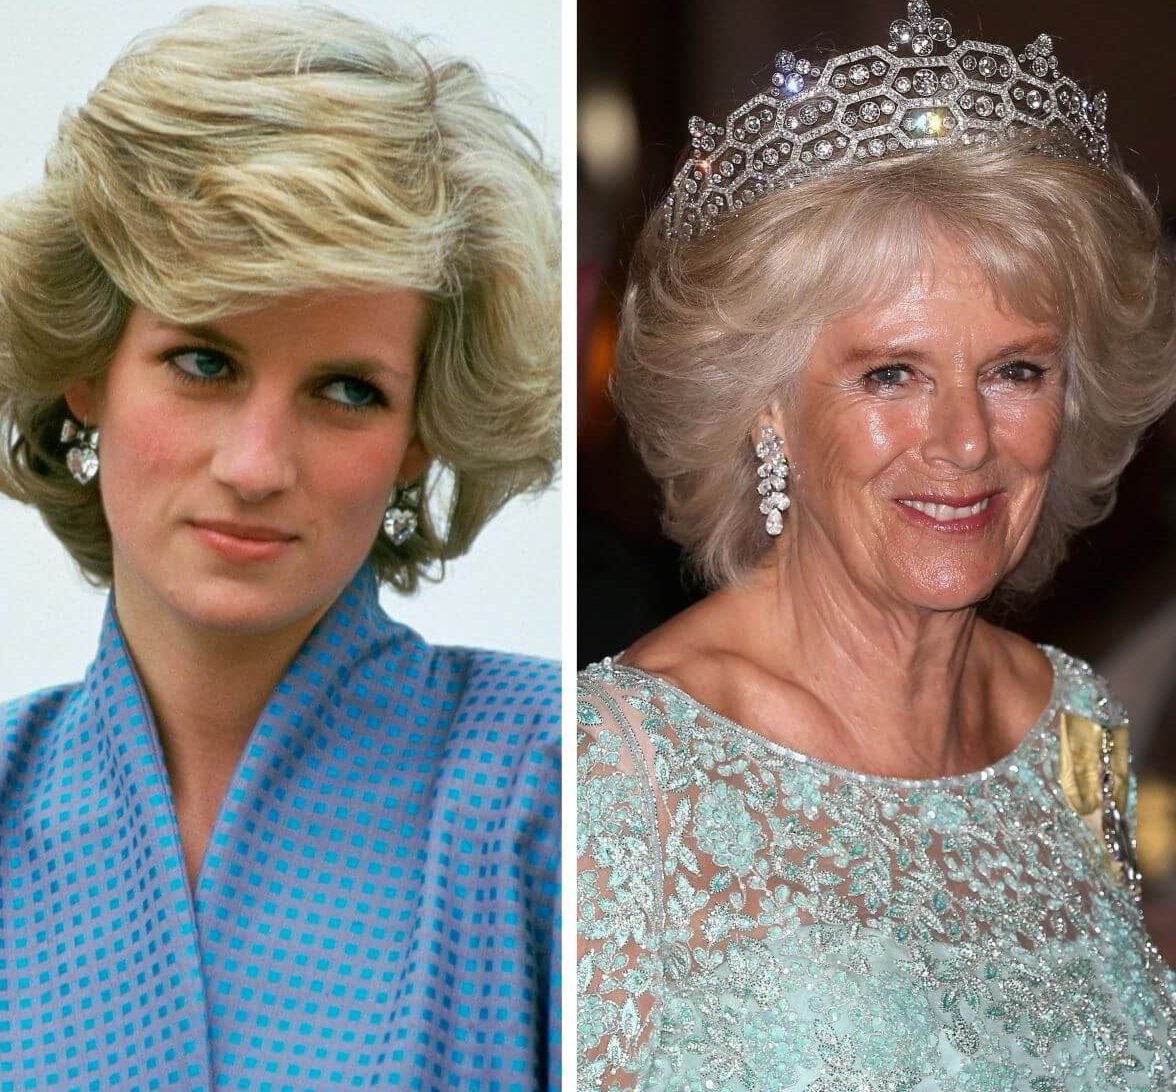 Royal Author Explains How Princess Diana Taunted and Tried to Make Camilla Parker Bowles Go ‘Insane’ With a Blue Dress